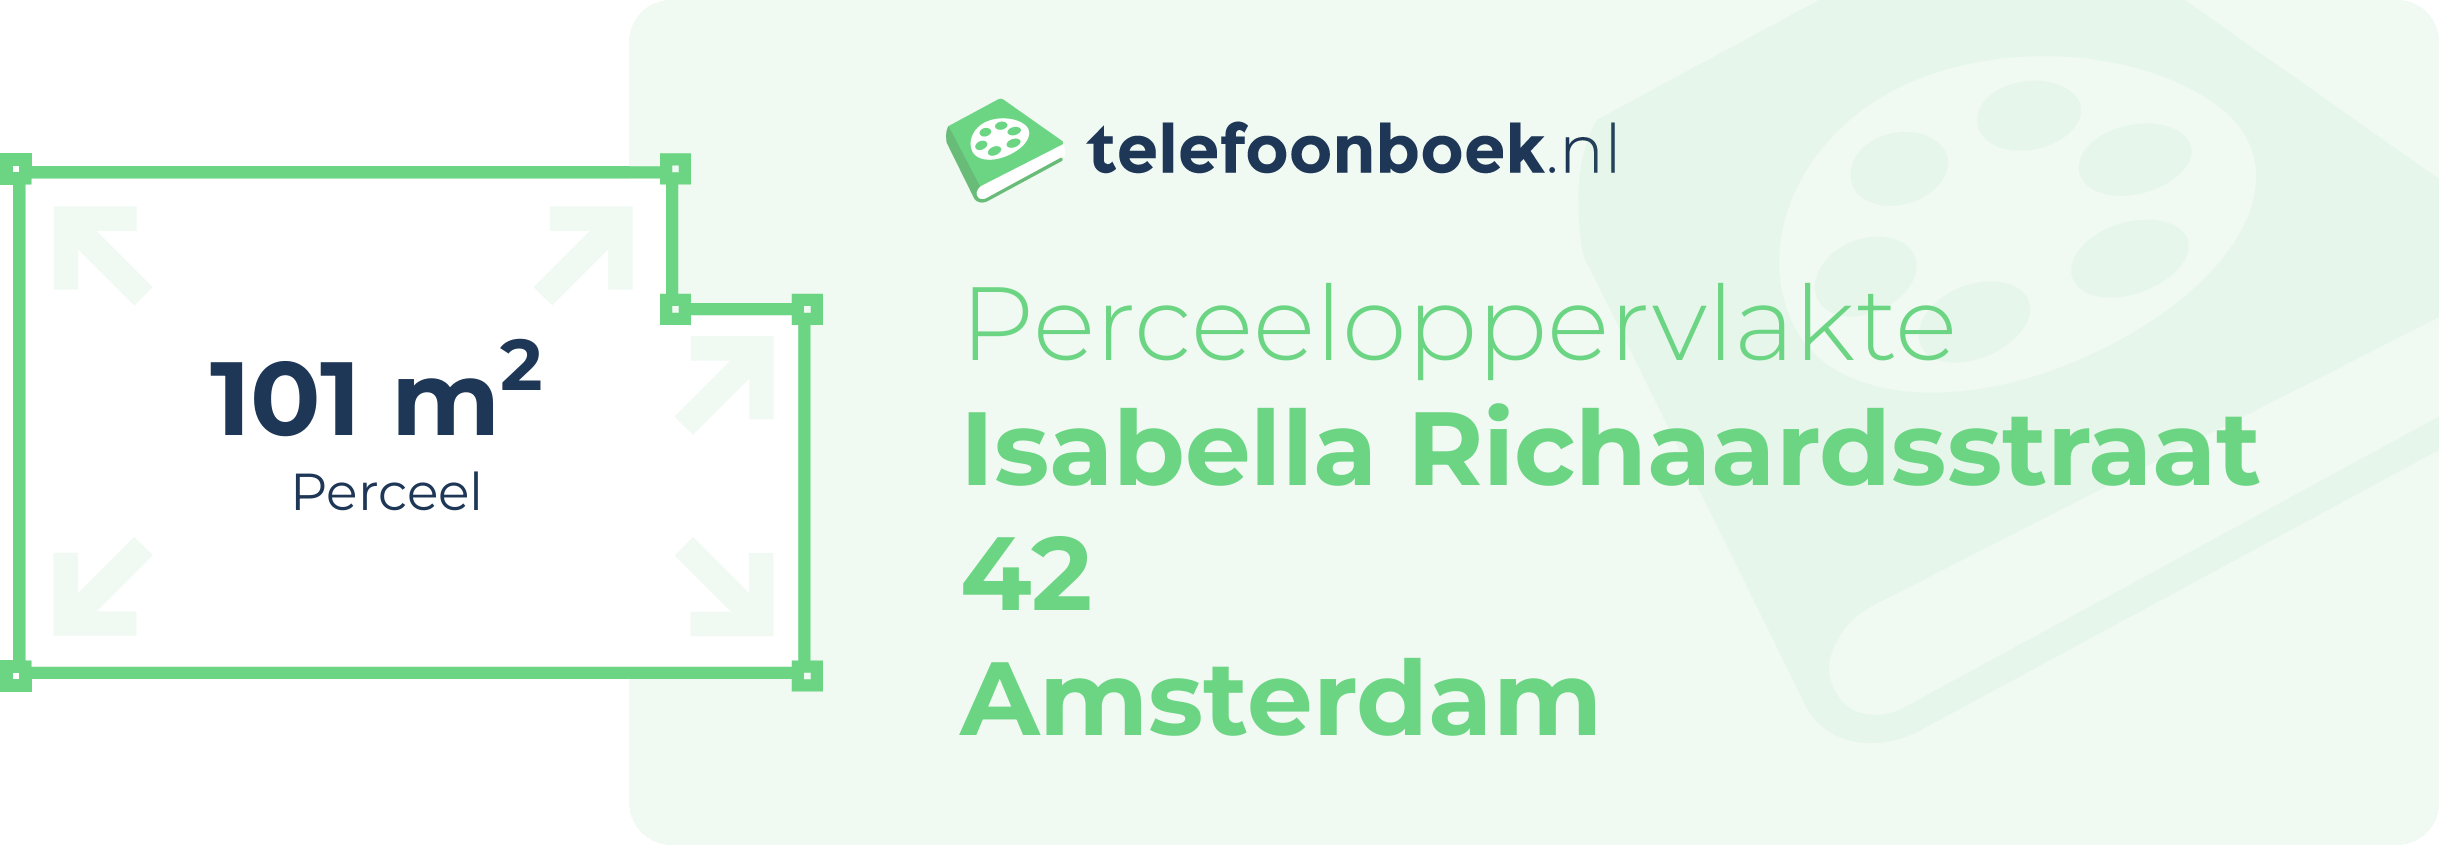 Perceeloppervlakte Isabella Richaardsstraat 42 Amsterdam